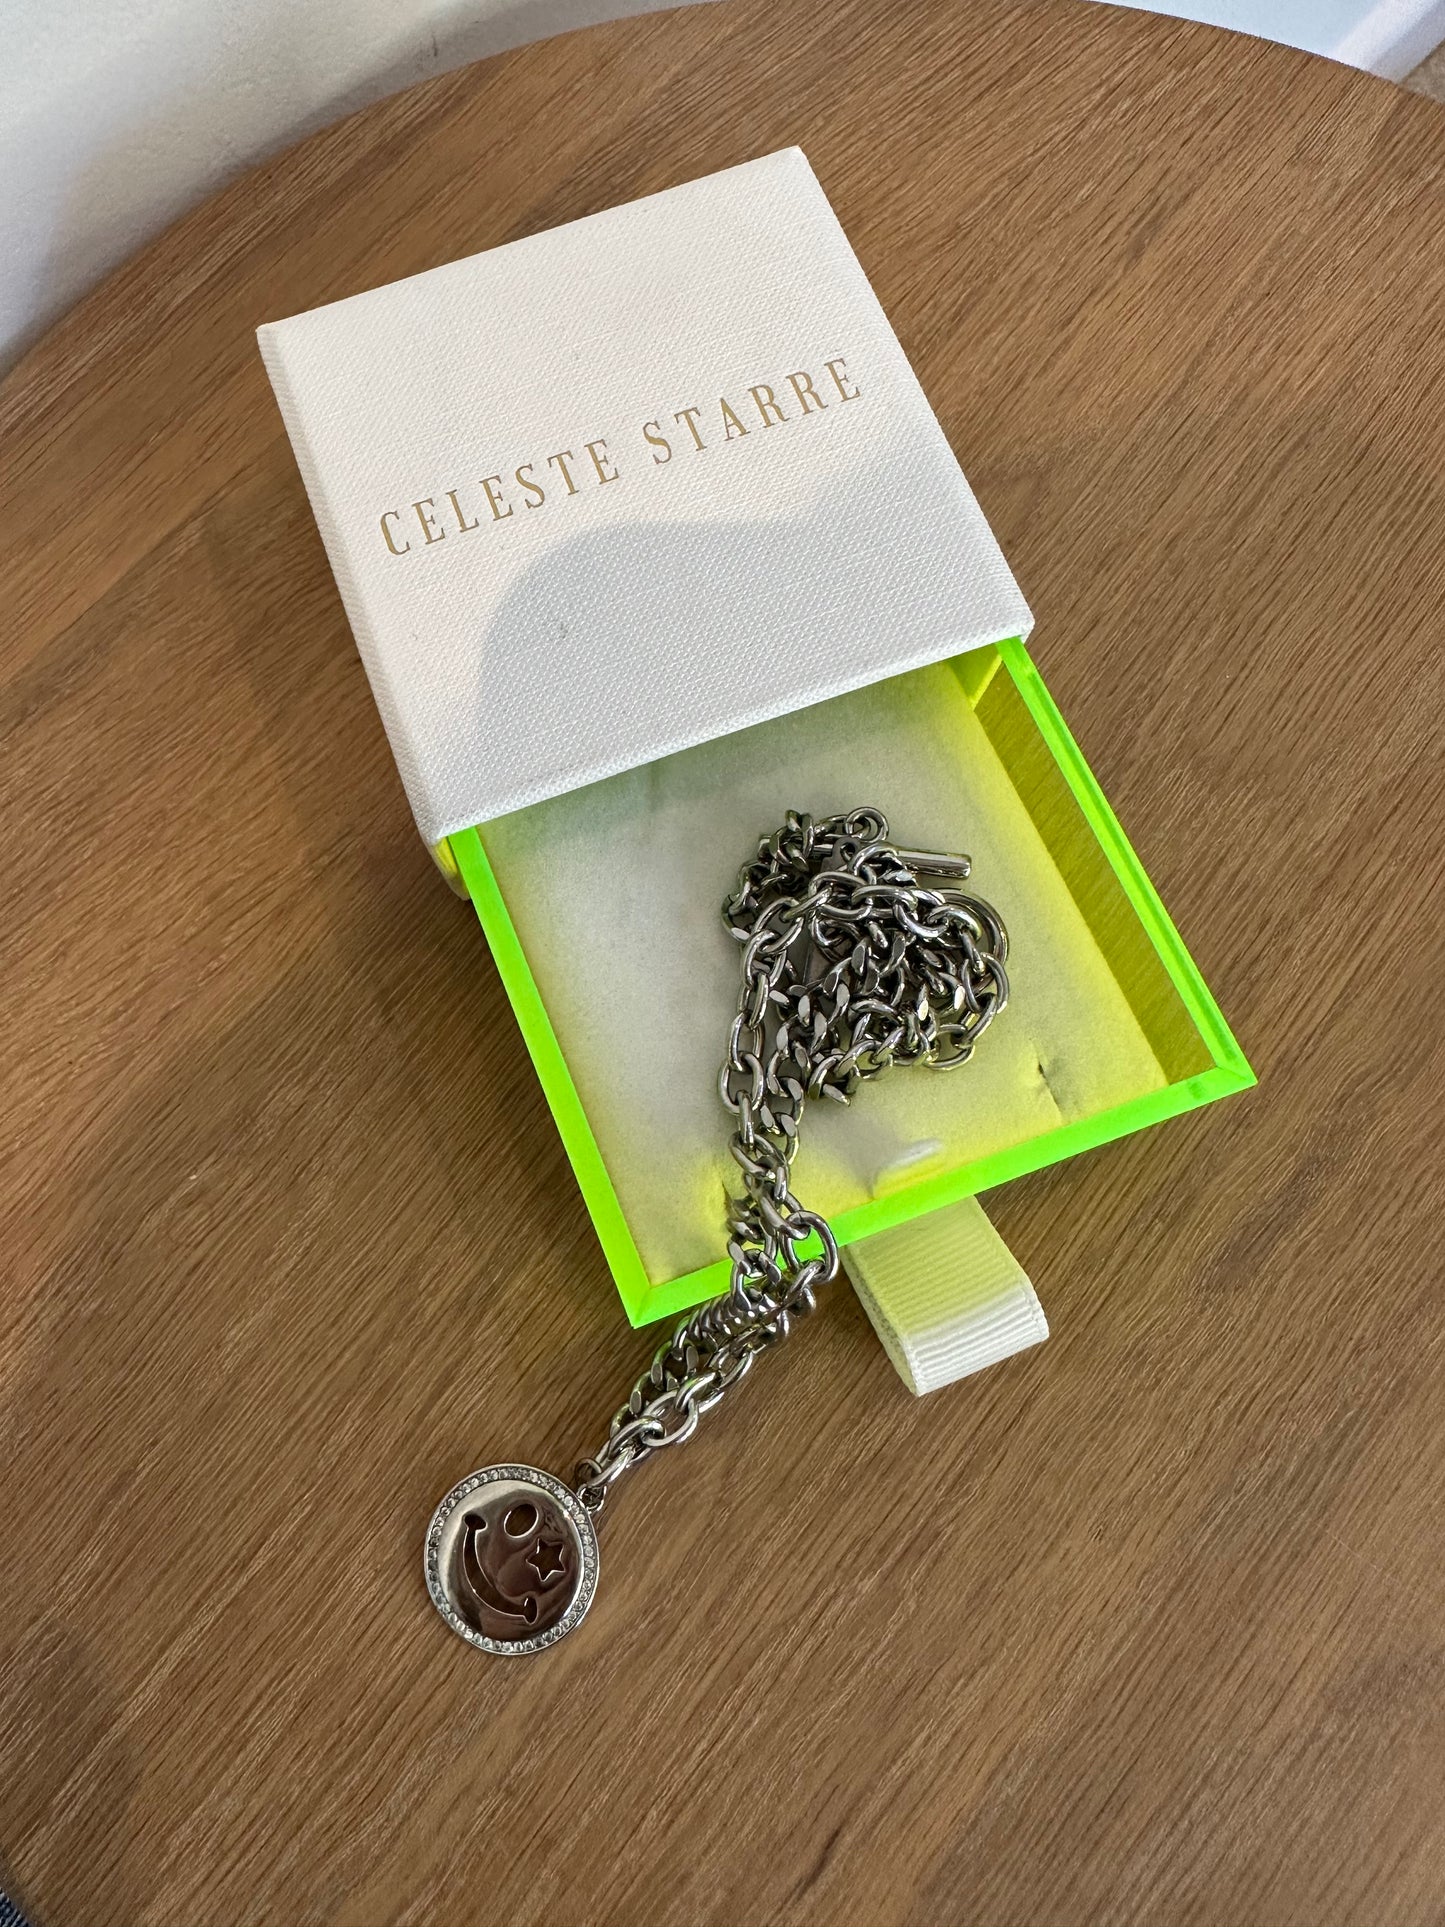 Celeste Starre Silver Necklace